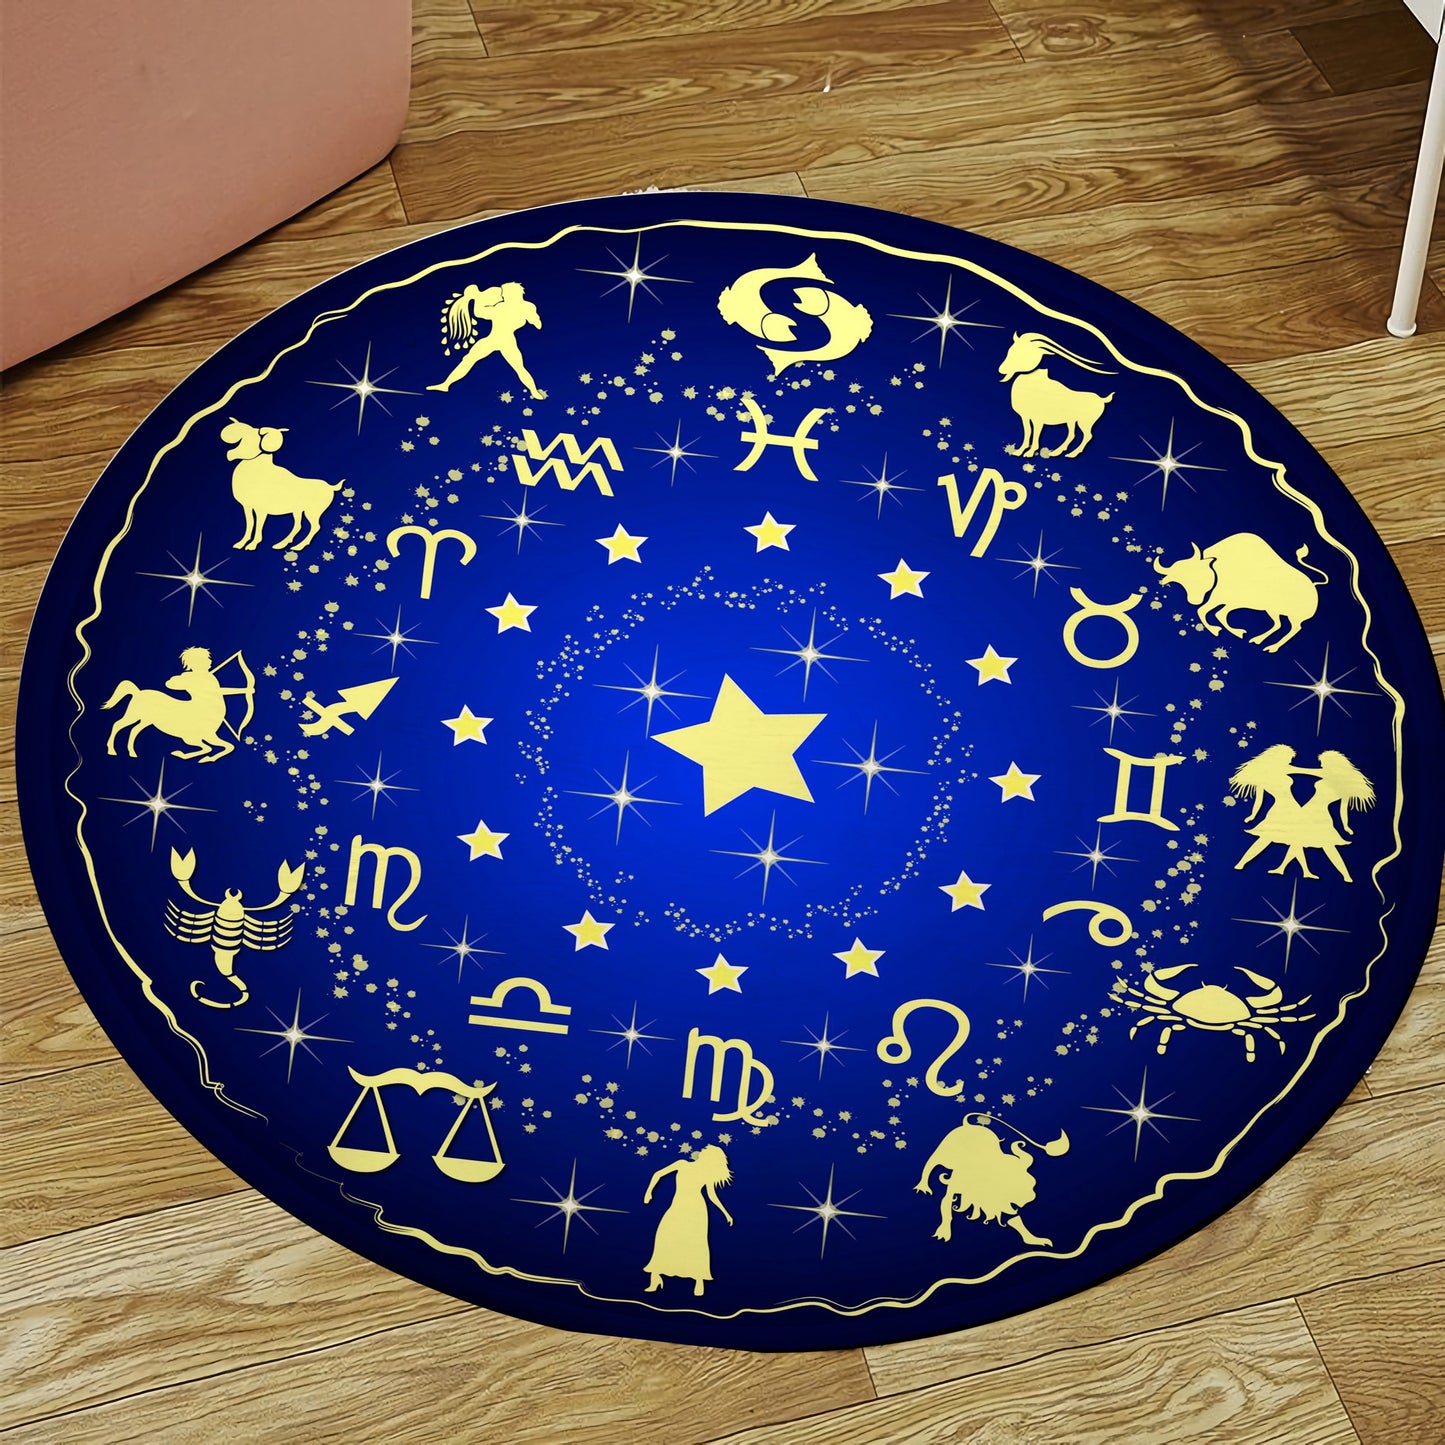 Zodiac Rug, Astrology Carpet, Aries, Taurus, Gemini, Cancer, Leo, Virgo, Libra, Scorpio, Sagittarius Patterned Mat